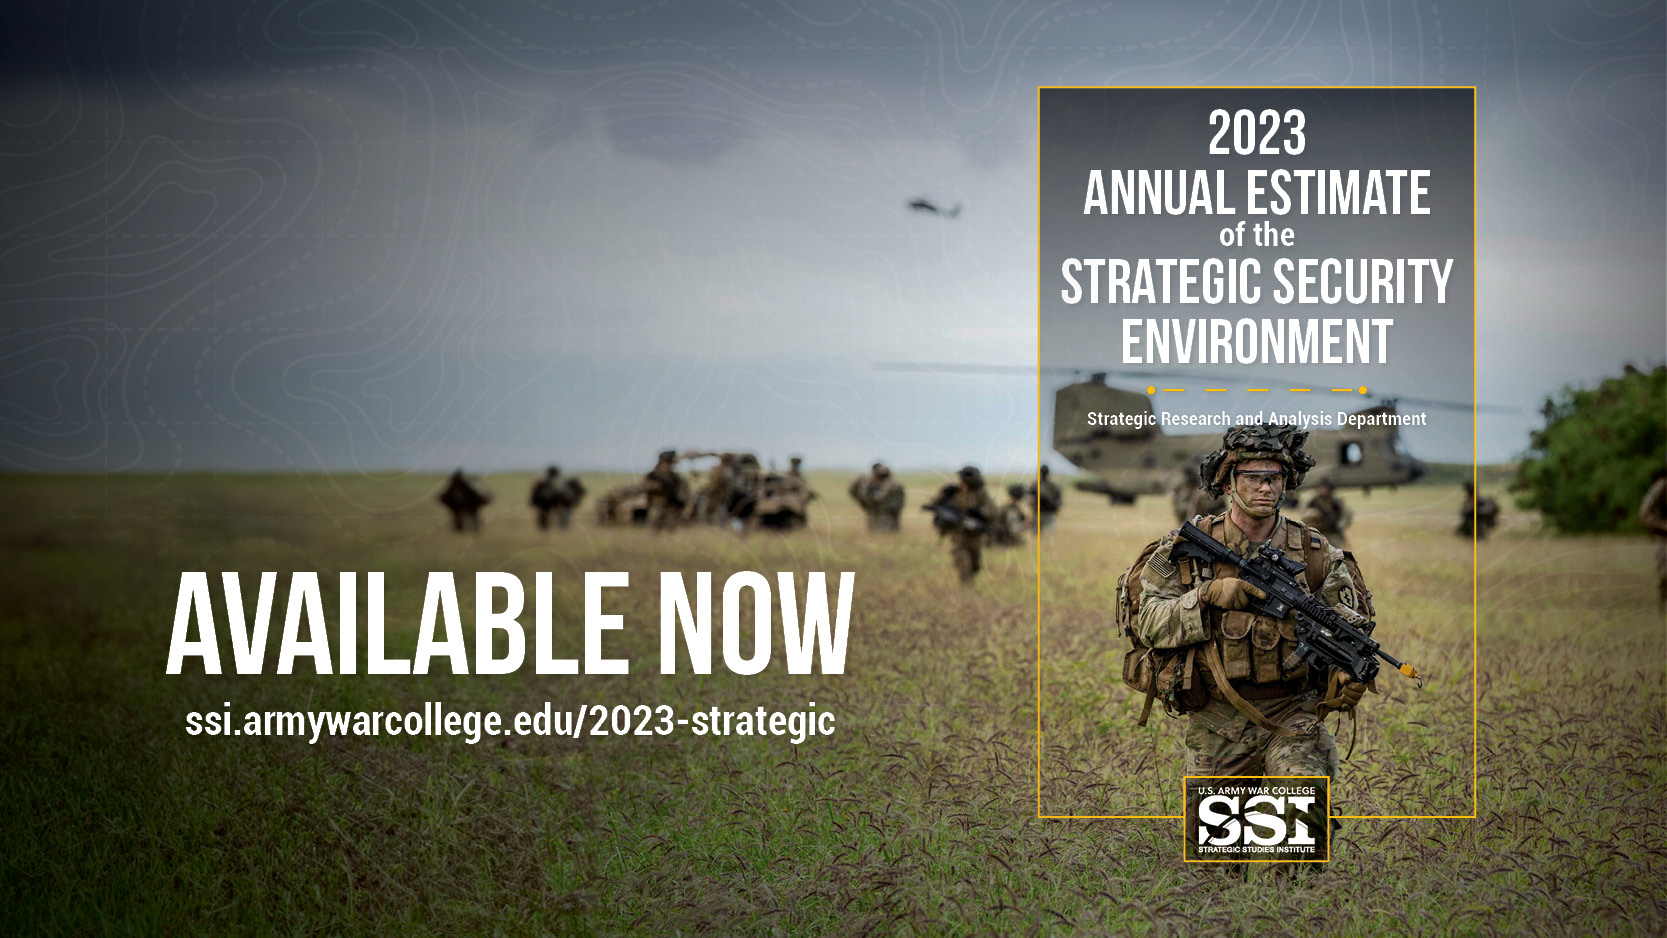 2023 Annual Estimate of the Strategic Security Environment